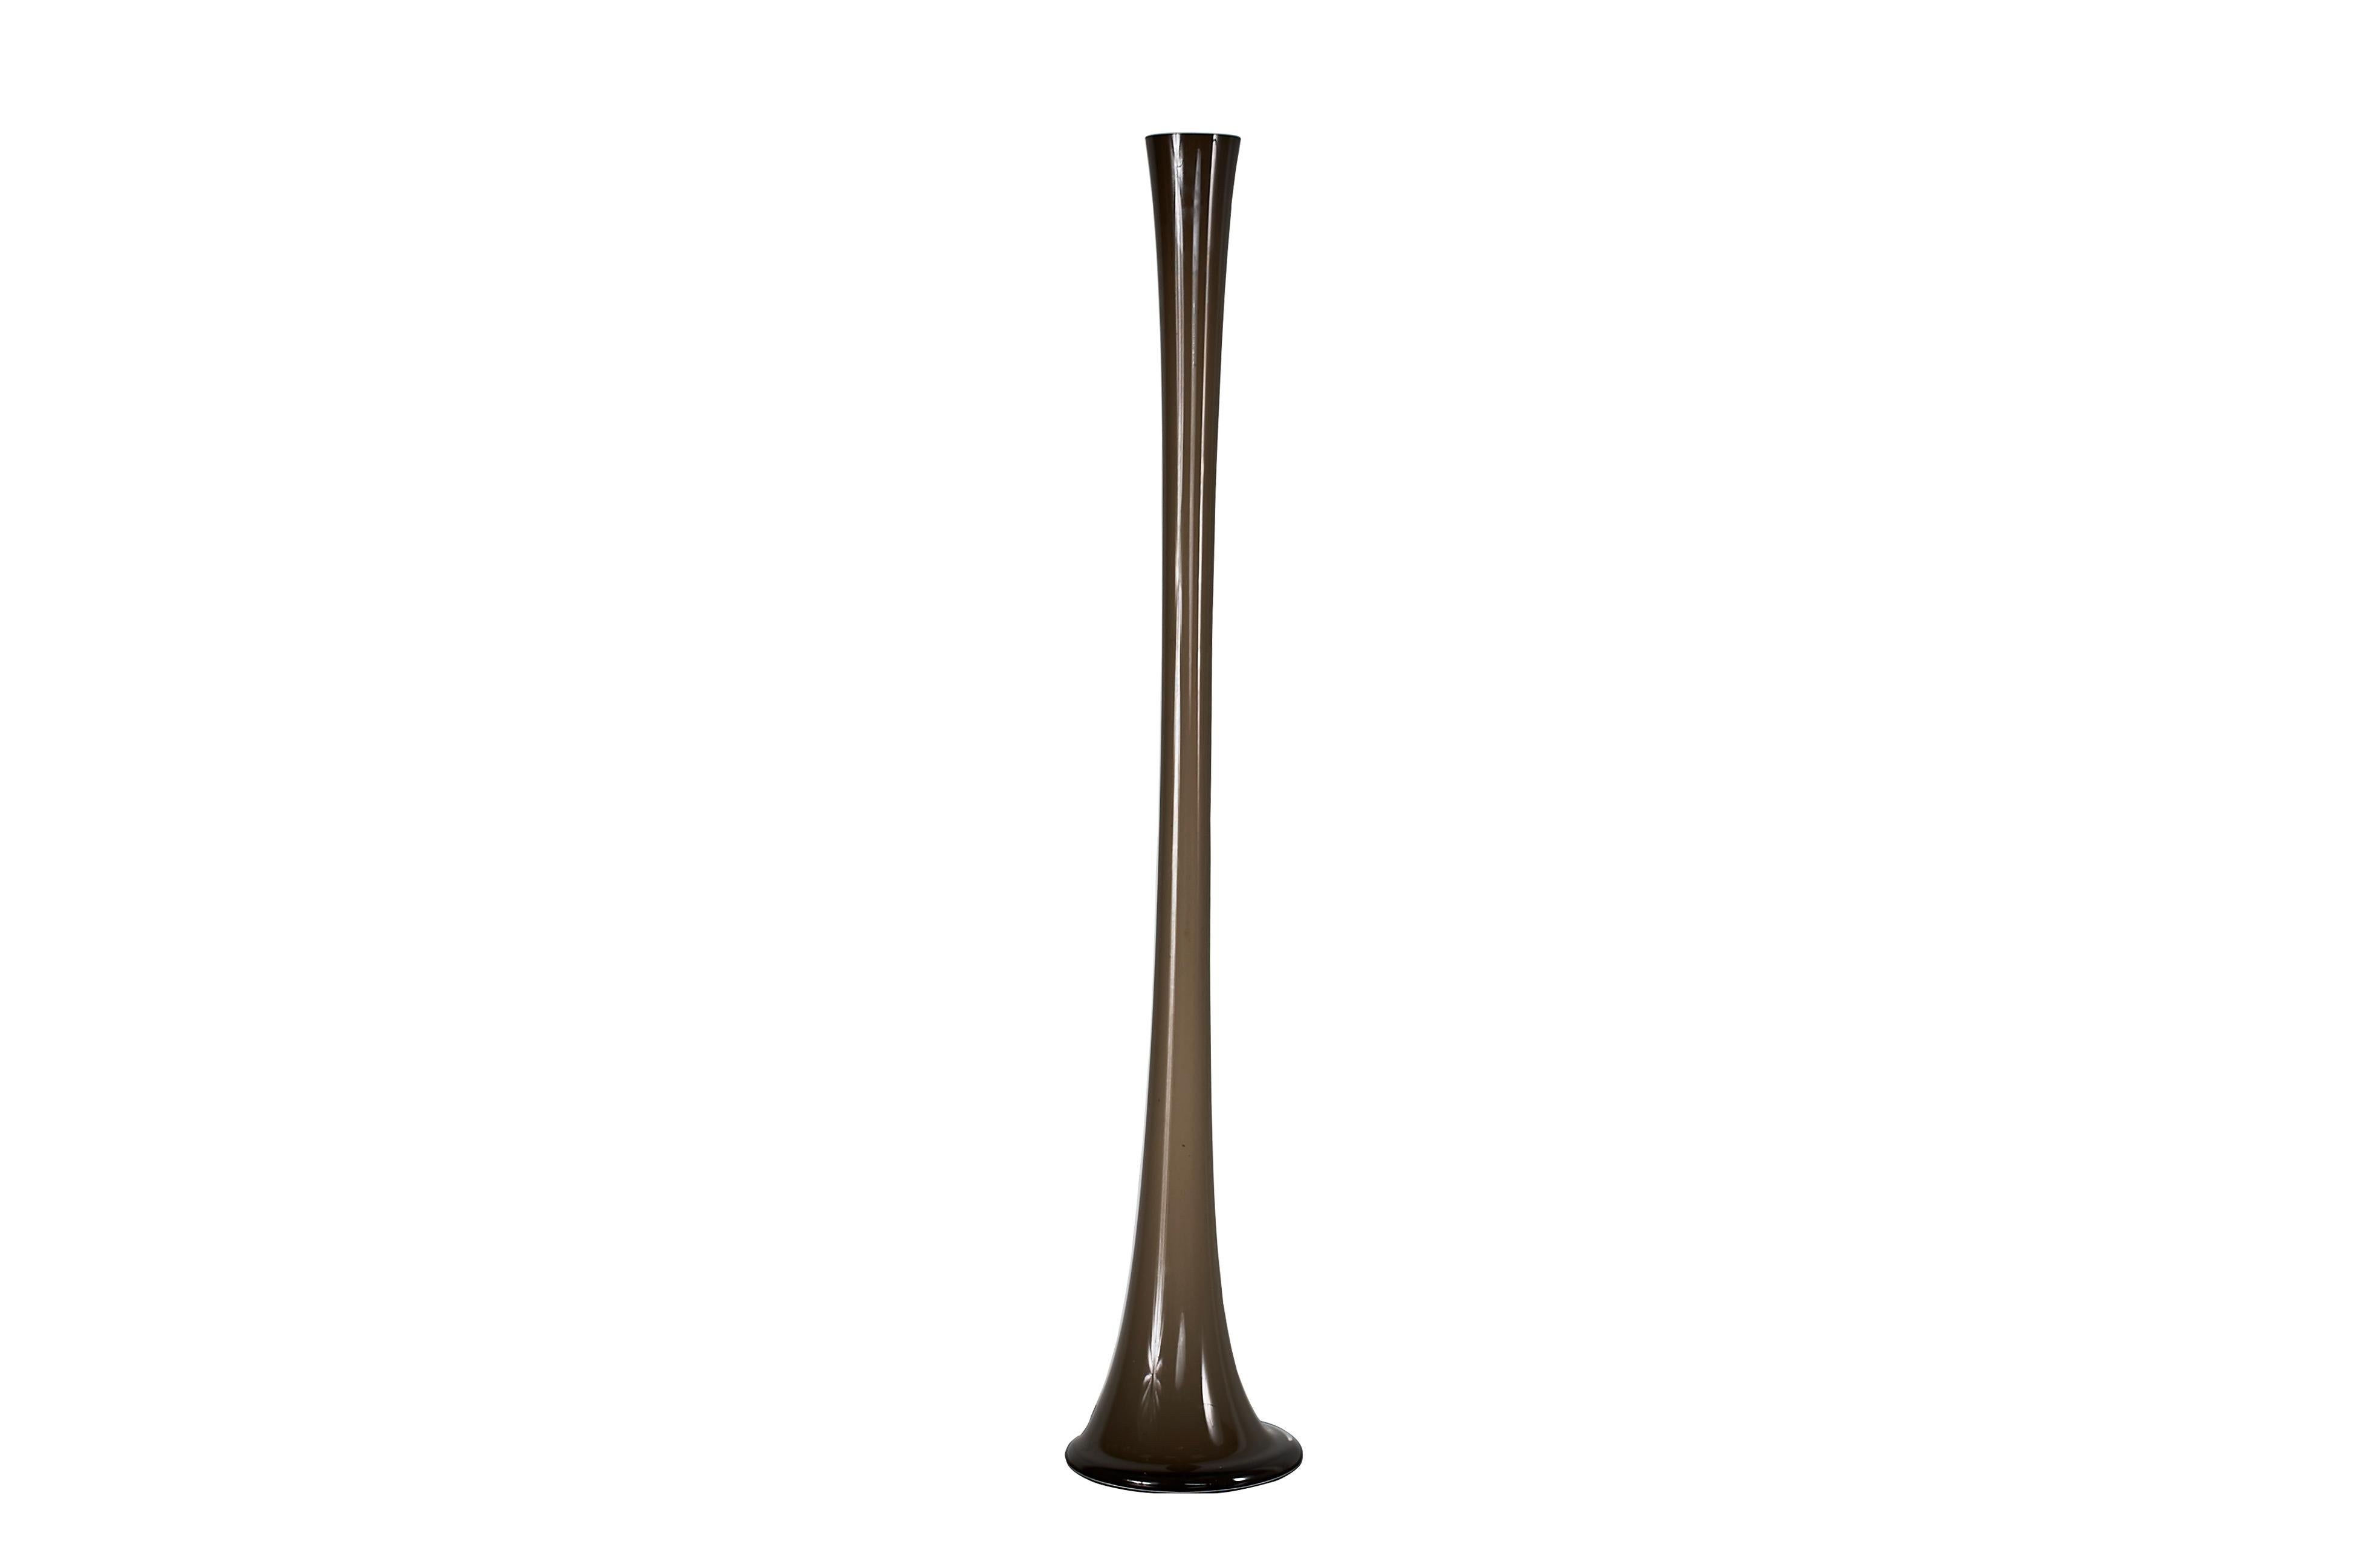 Exquisite Murano Glass Mid-Century Modern Tulip Floor Vase Monumentally Tall For Sale 1